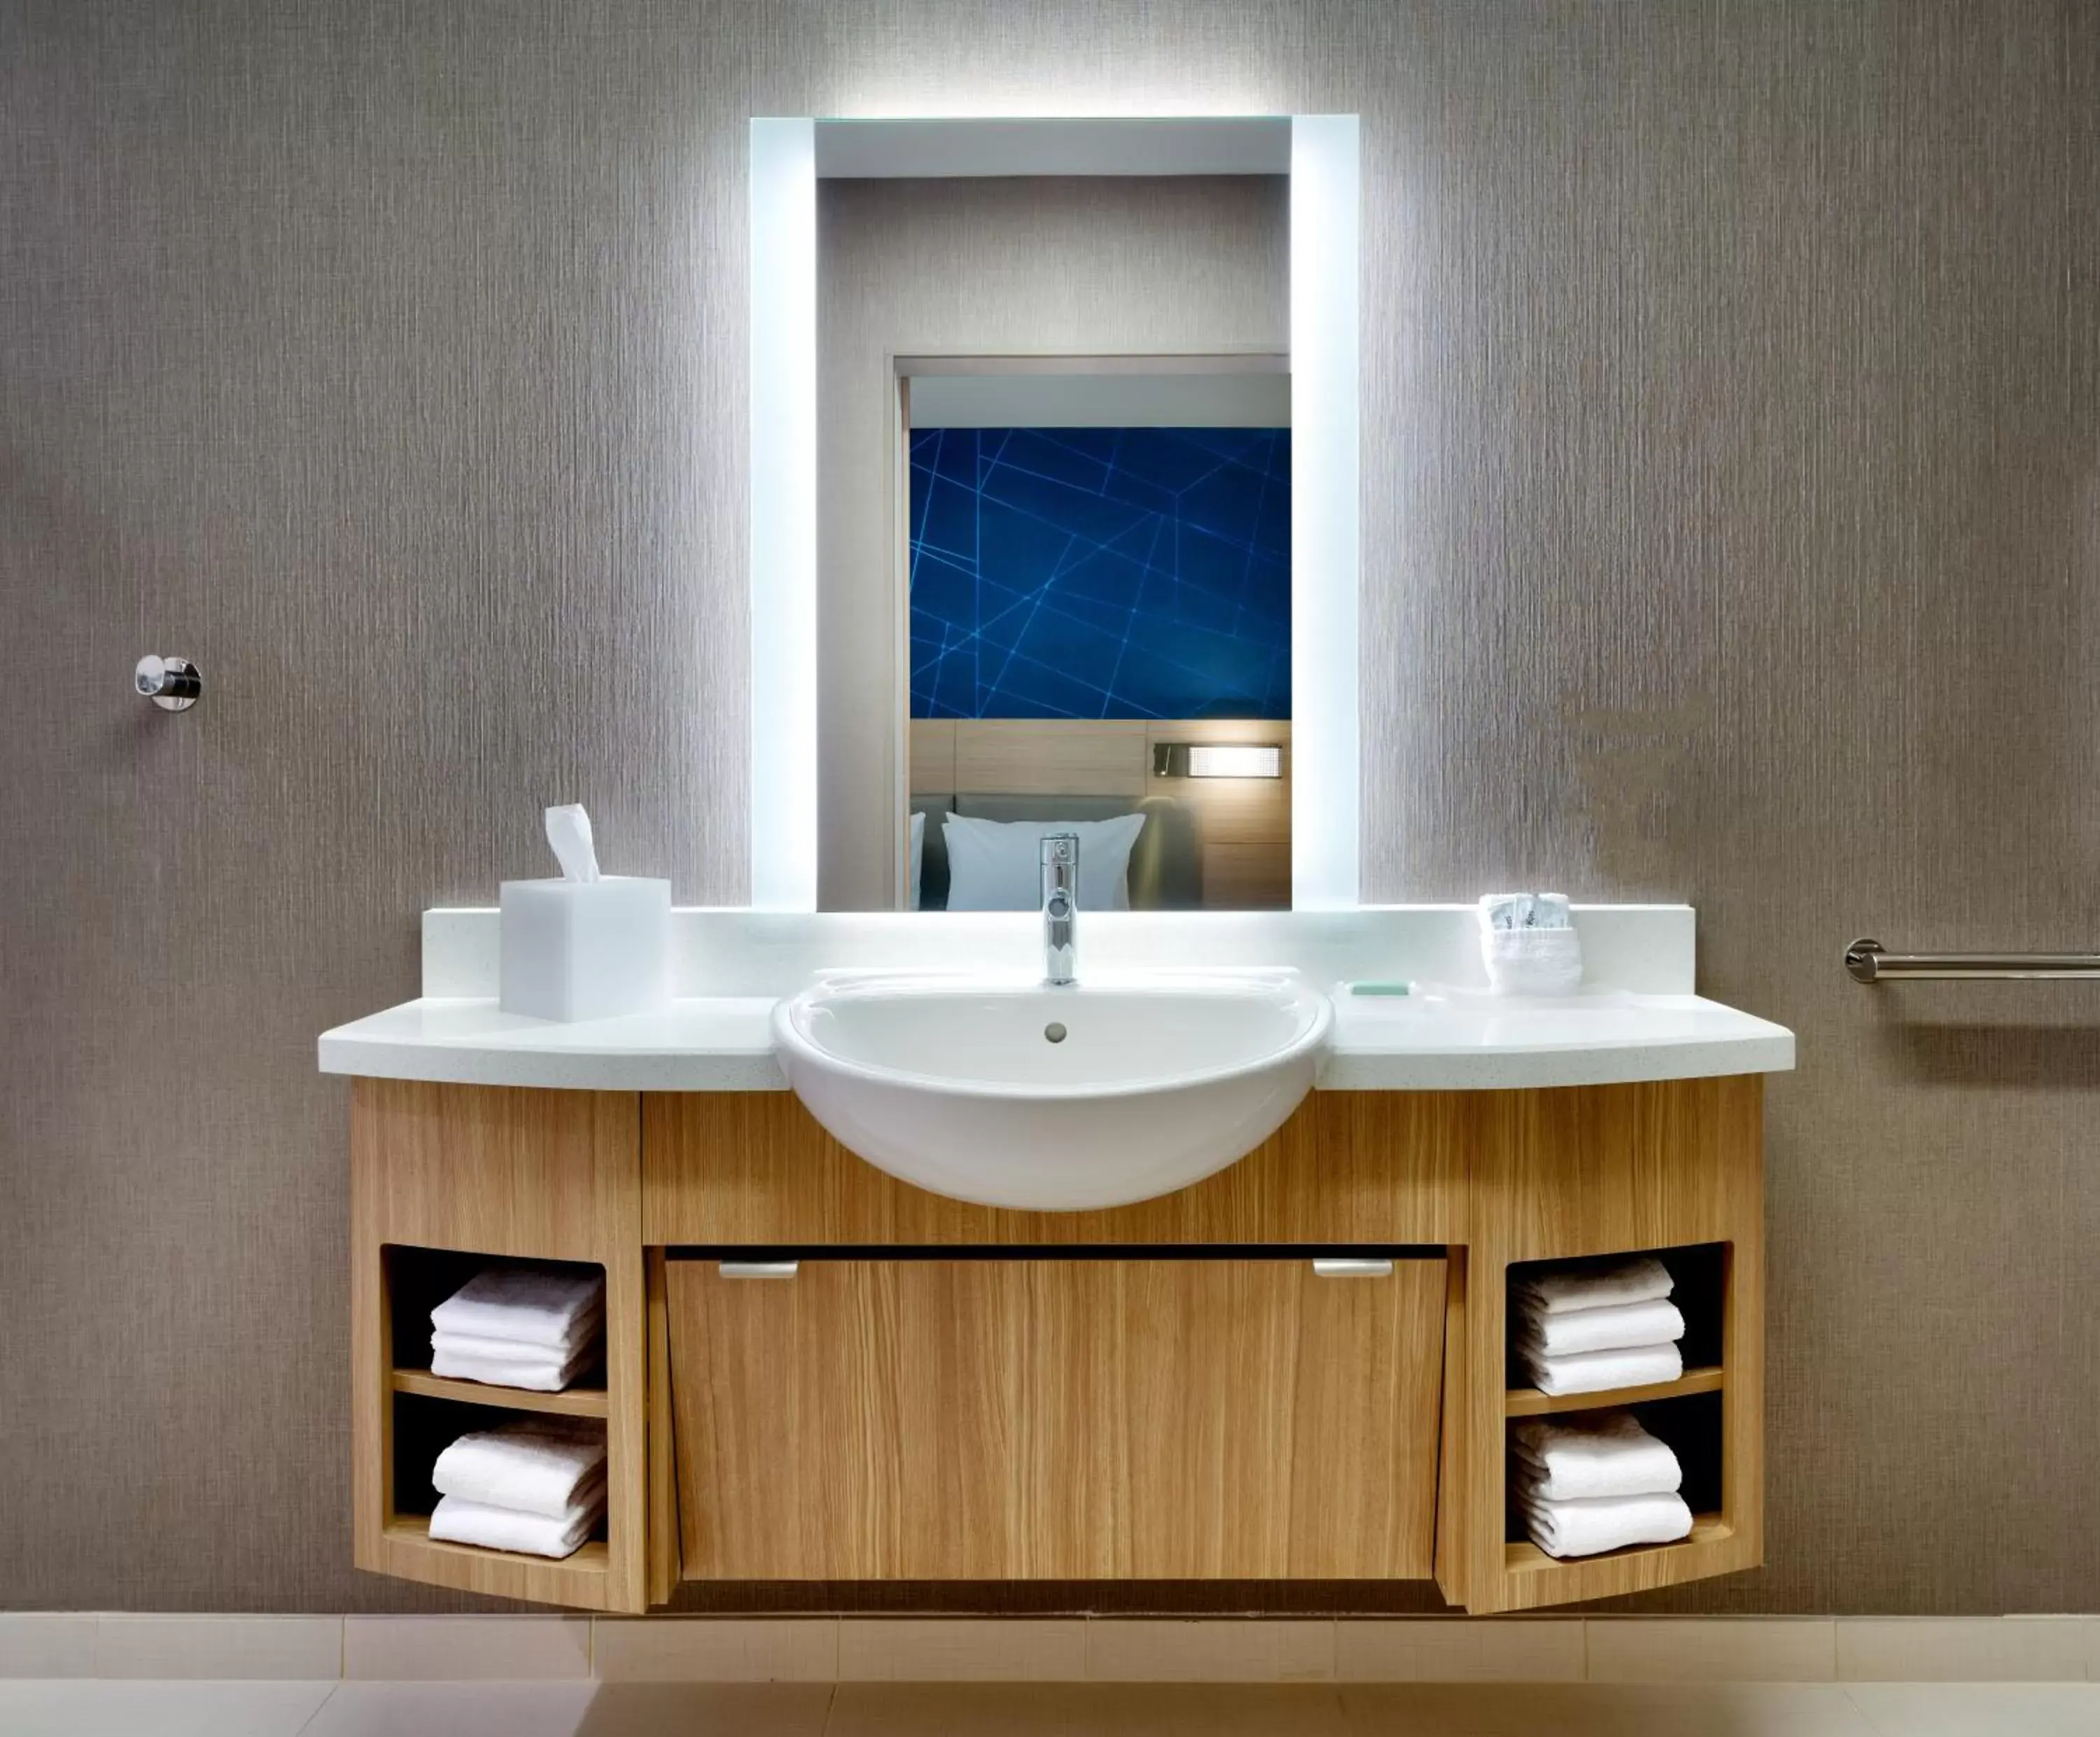 Bathroom in SpringHill Suites by Marriott Cottonwood